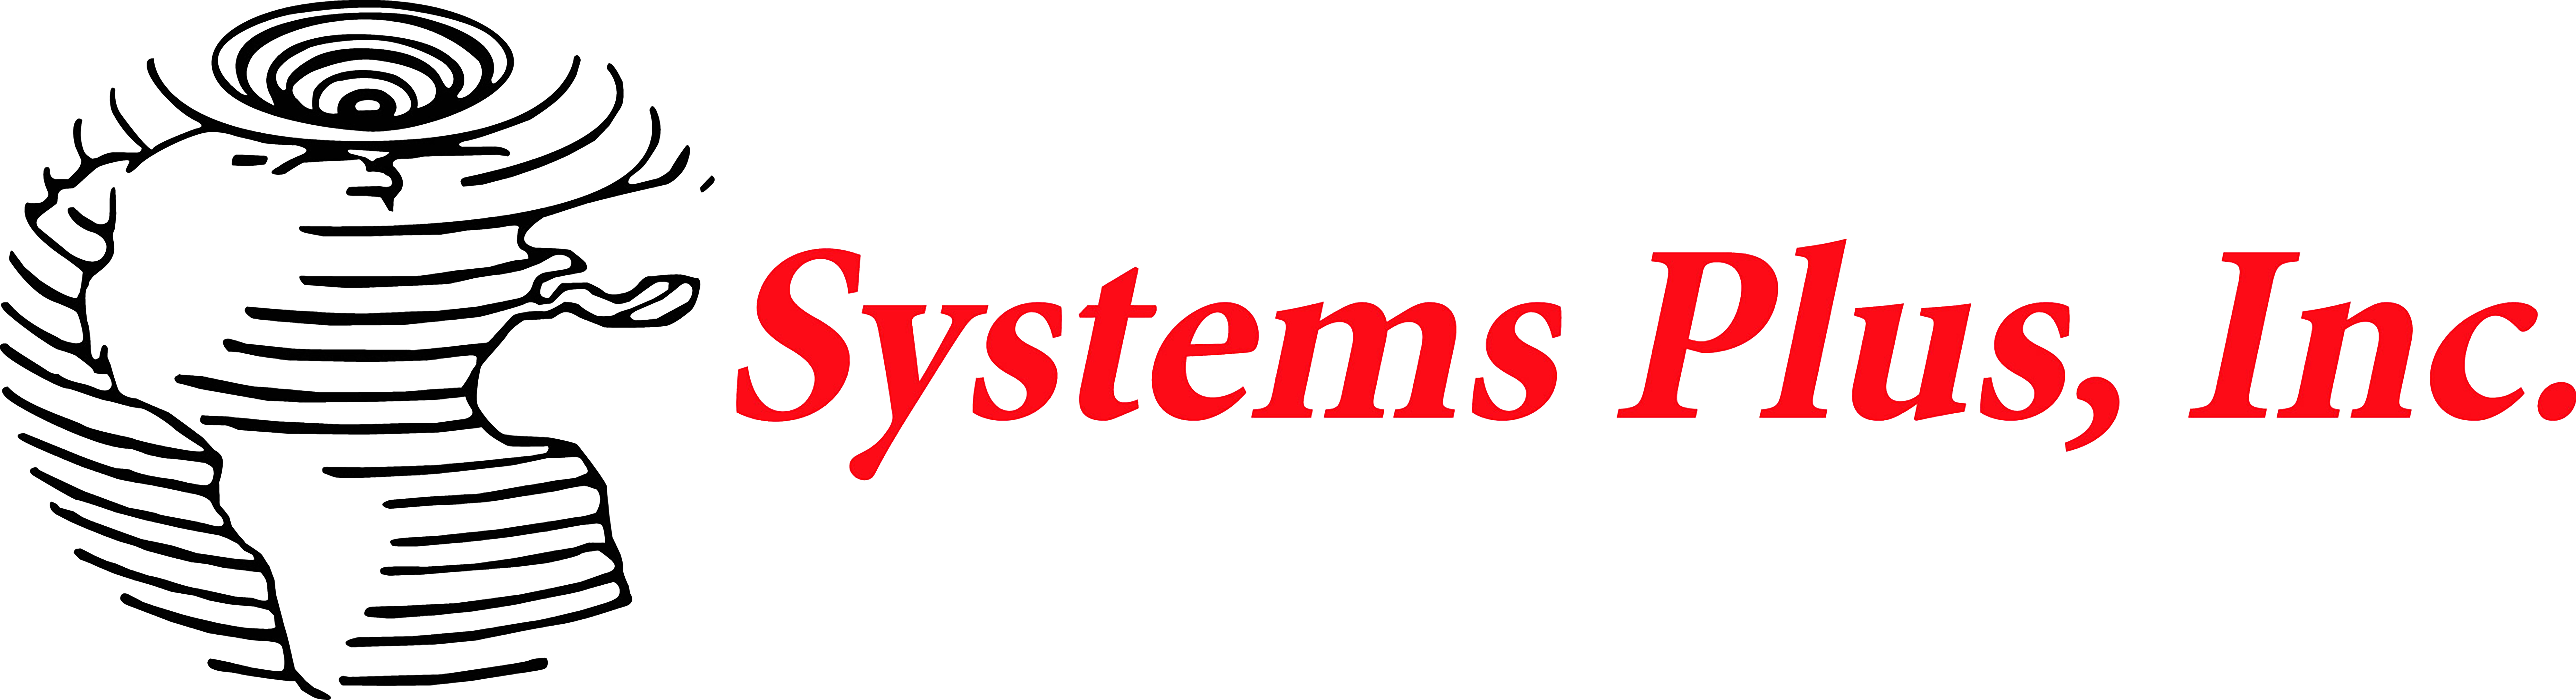 Systems Plus Inc. Logo